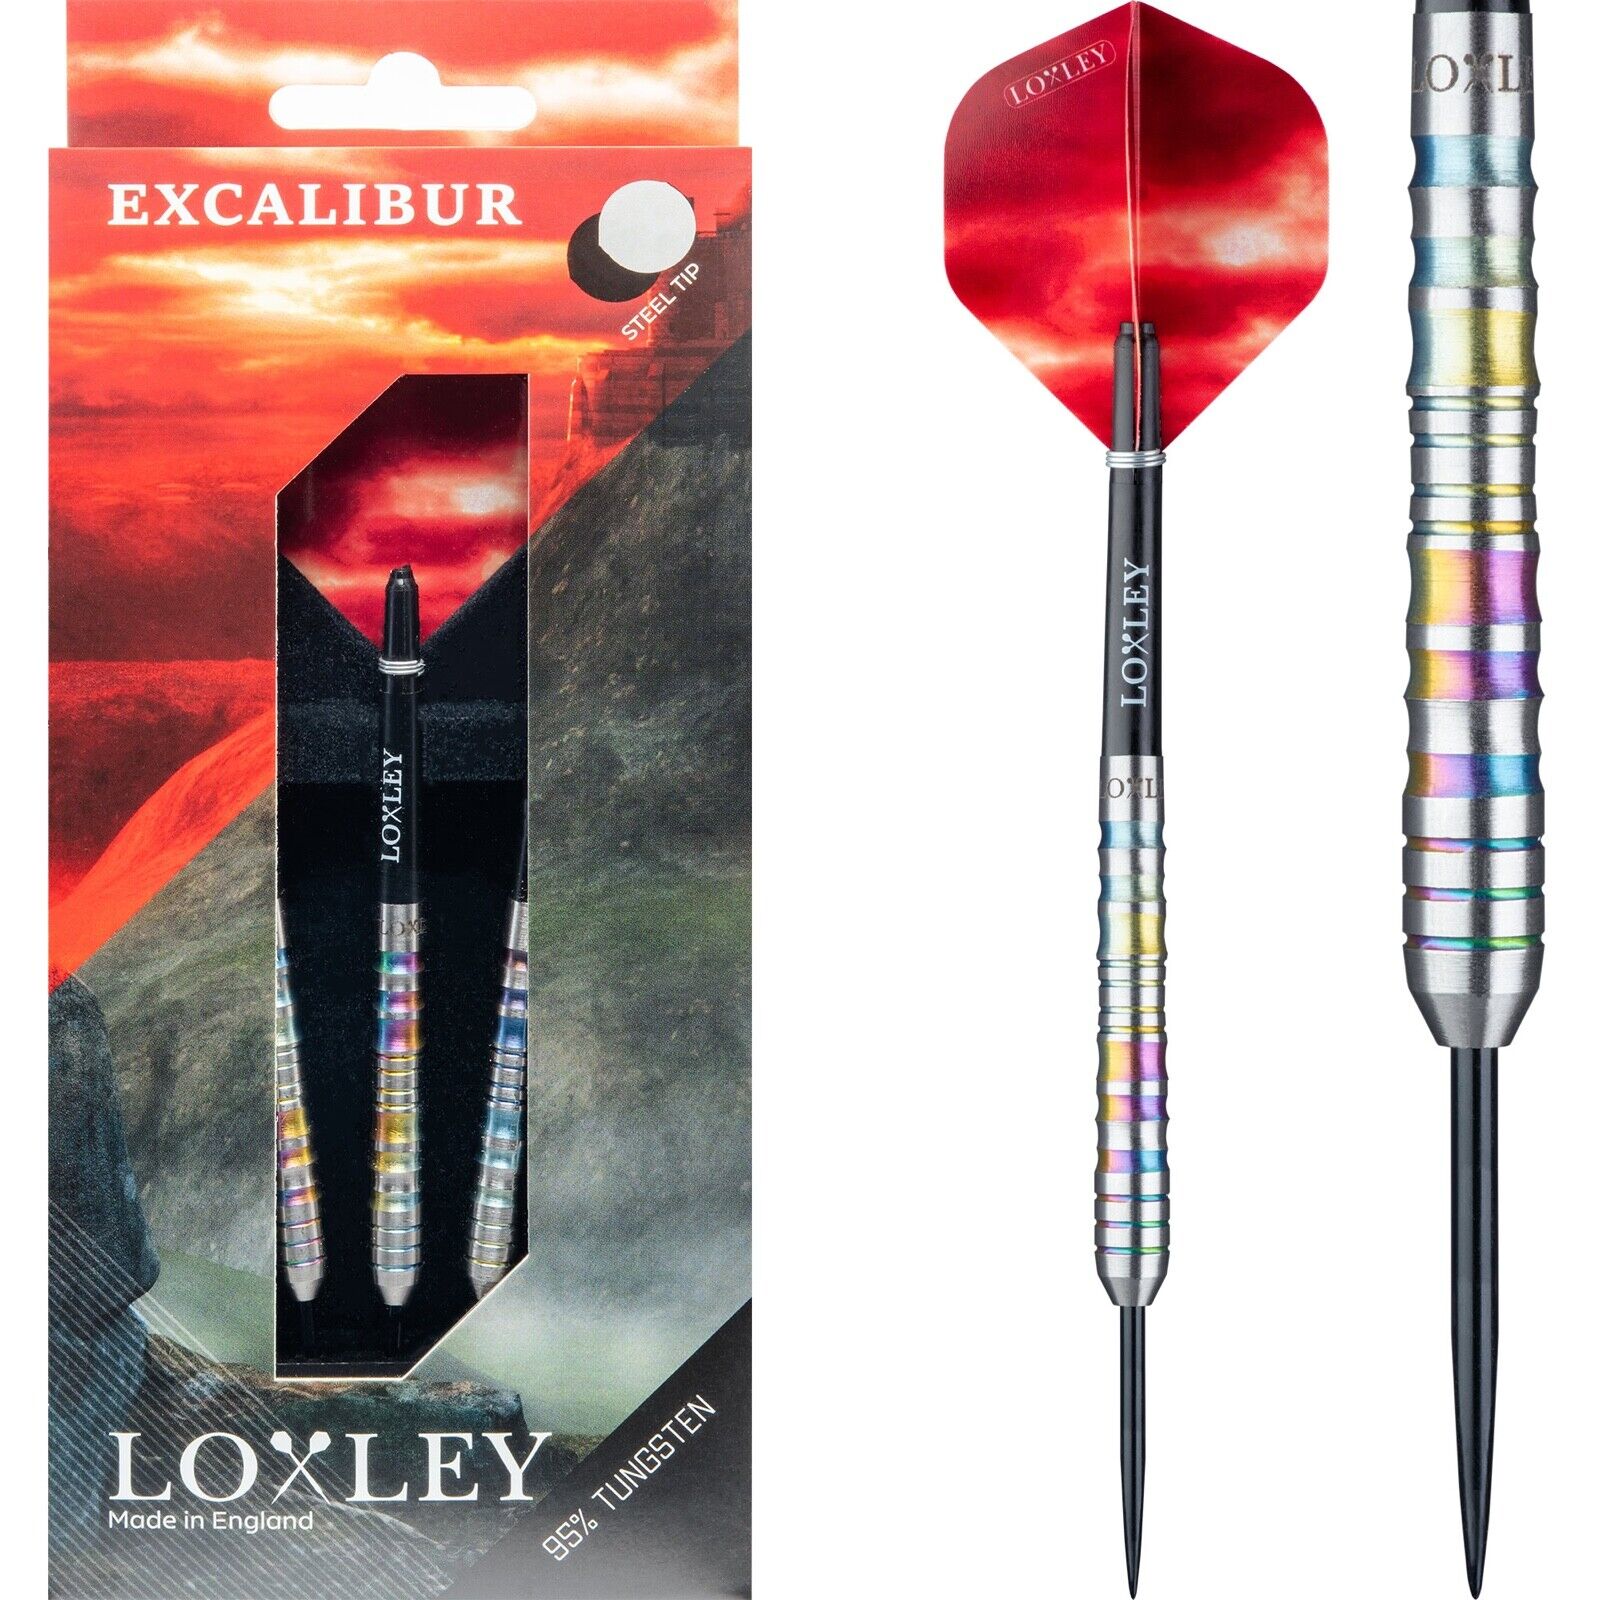 Loxley Excalibur